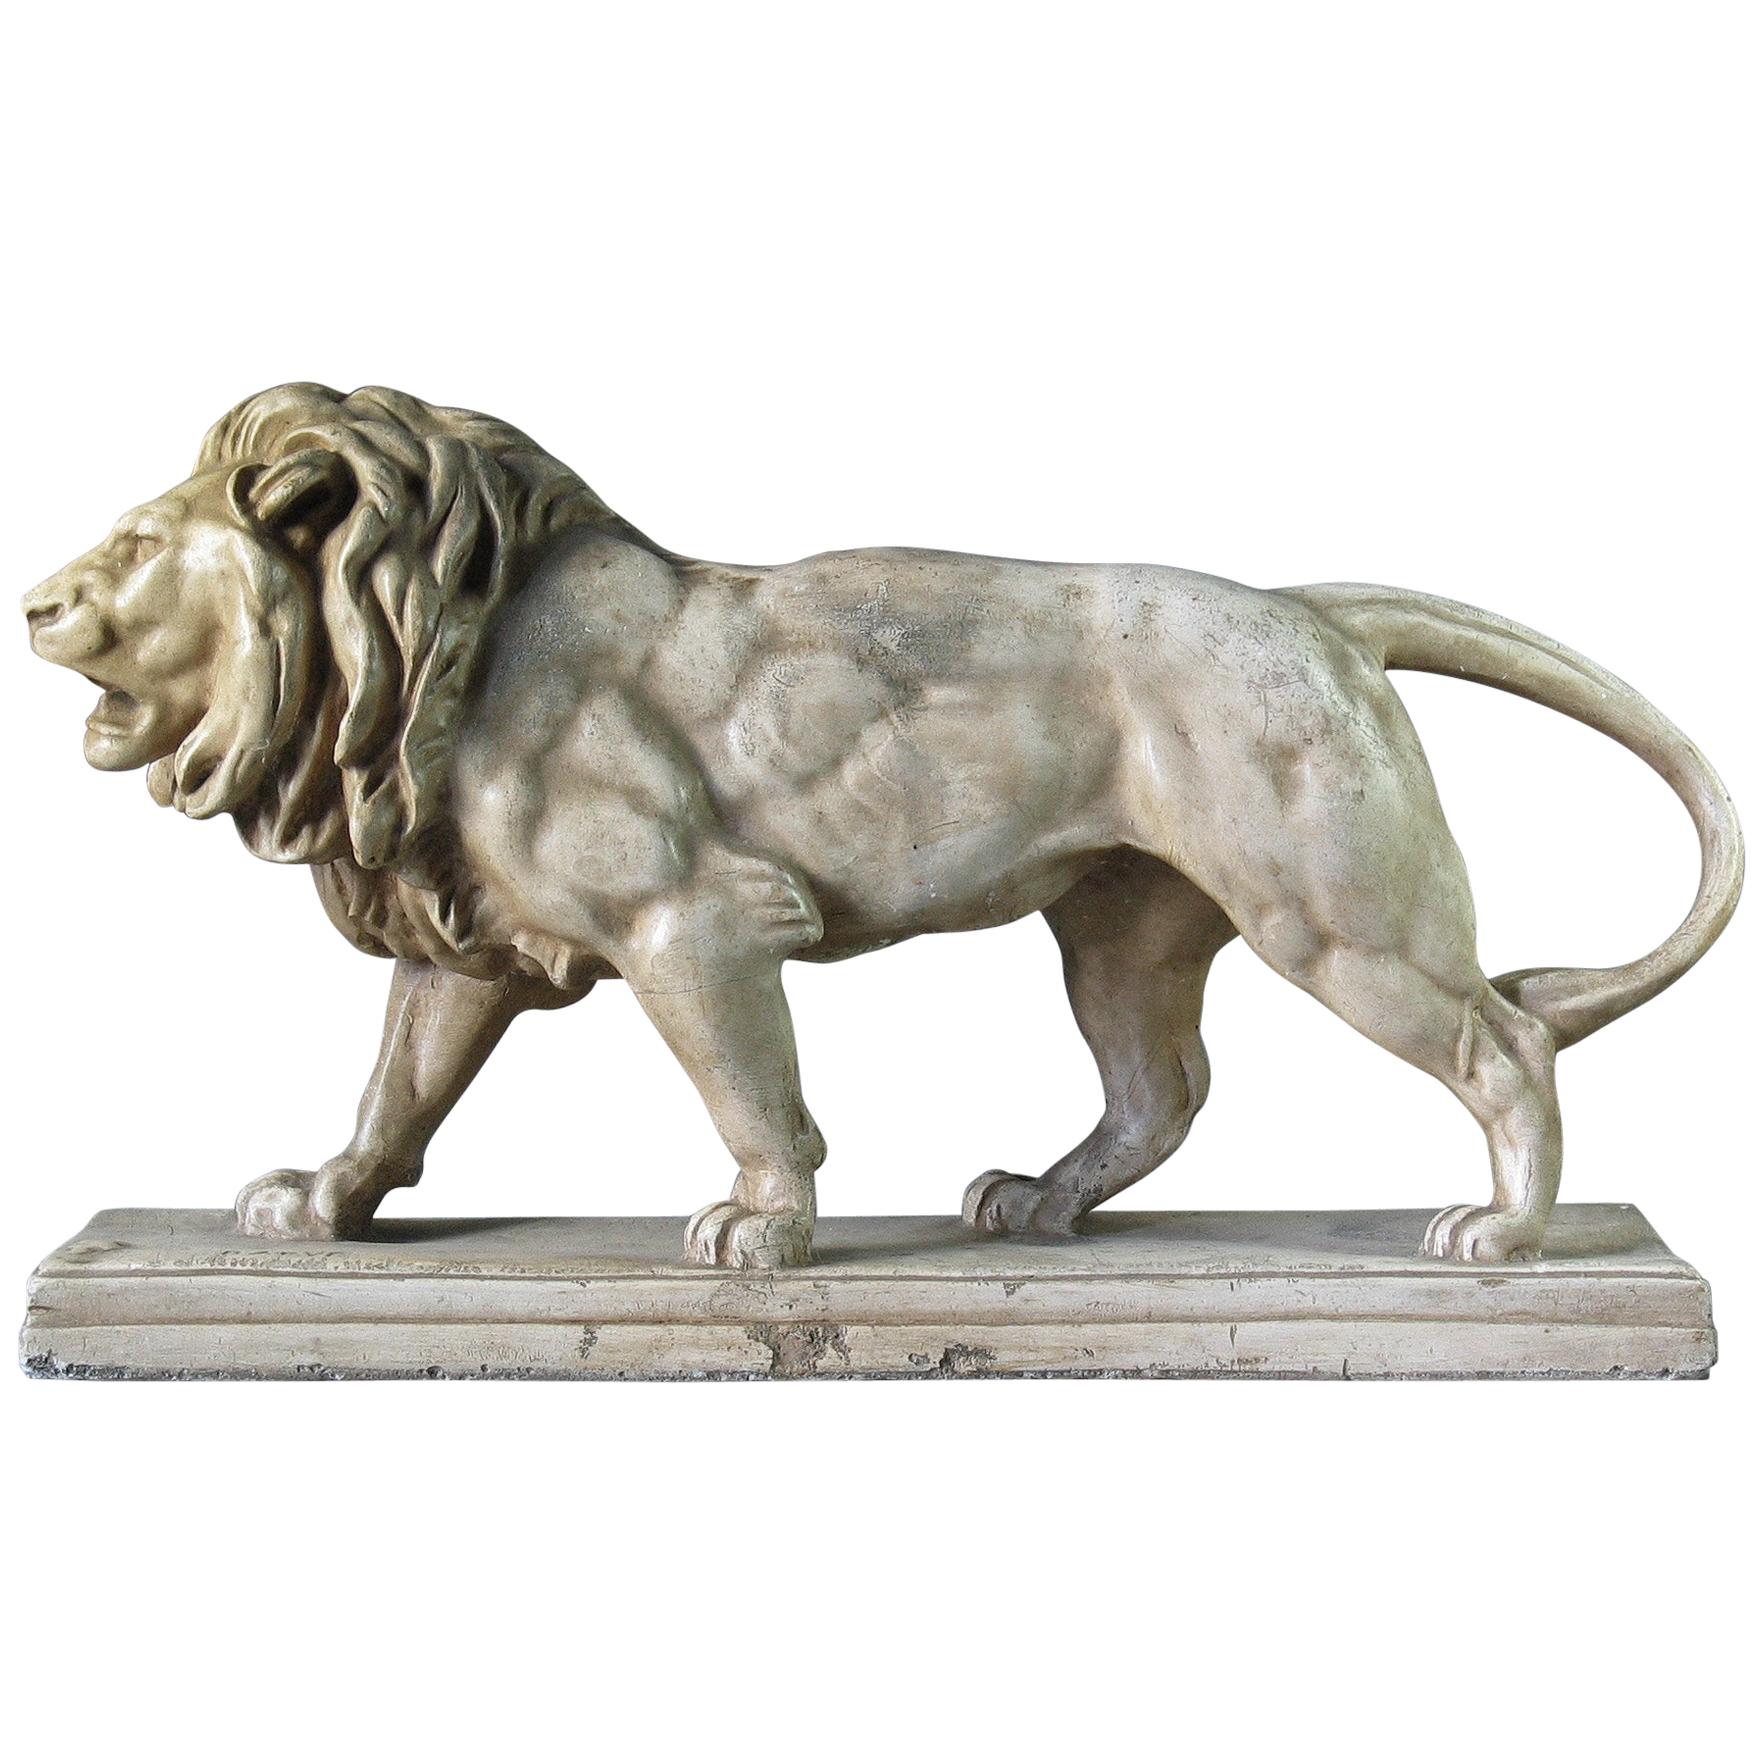 Antoine-Louis Barye 'French' Lion Qui Marche 'Walking Lion', 19th Century